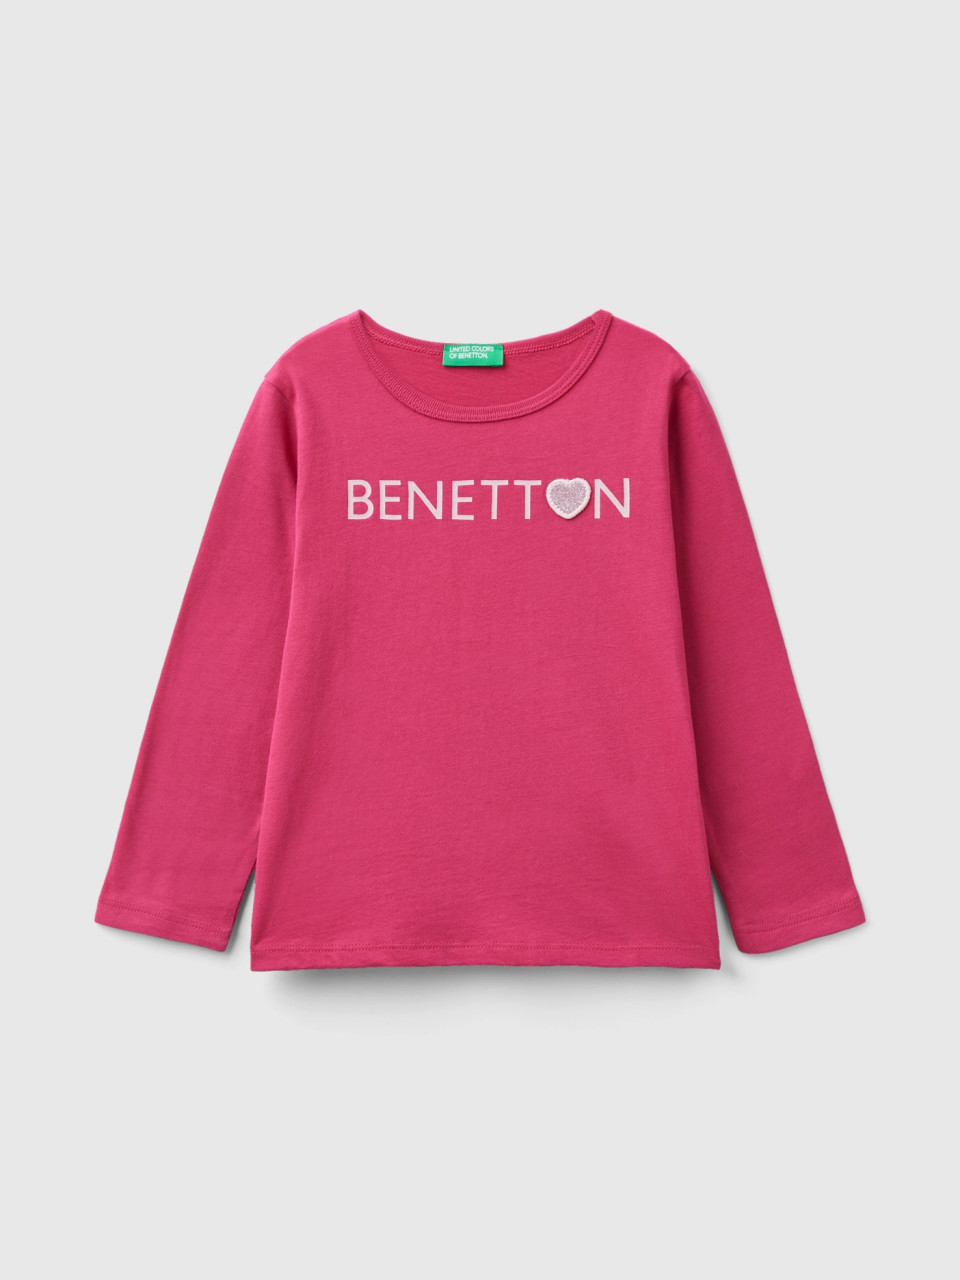 Benetton, Organic Cotton T-shirt With Glittery Print, Cyclamen, Kids